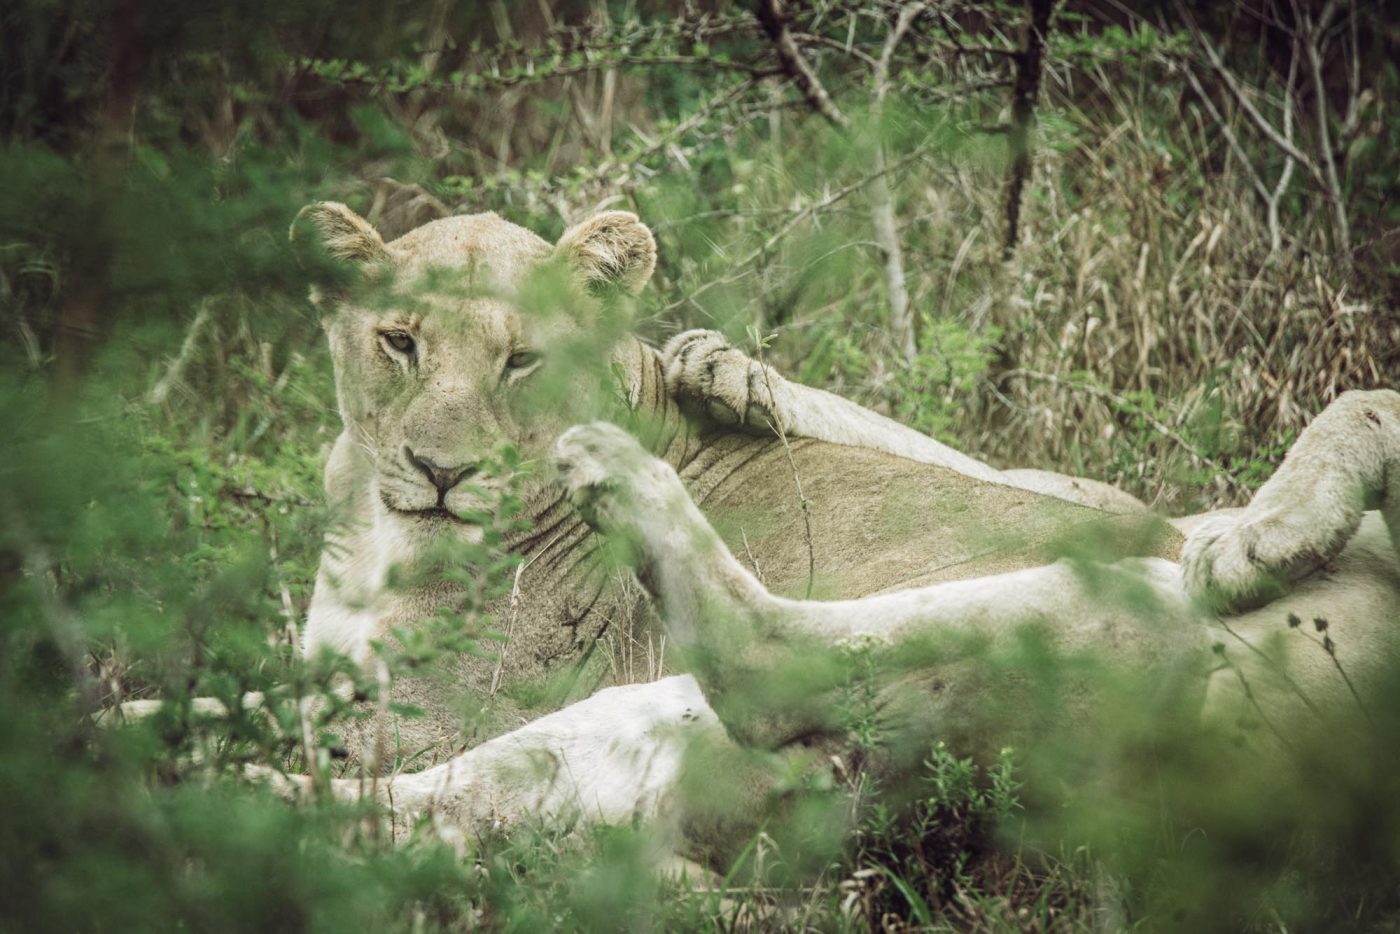 South Africa South Africa iMfolozi Park safari lion 03898